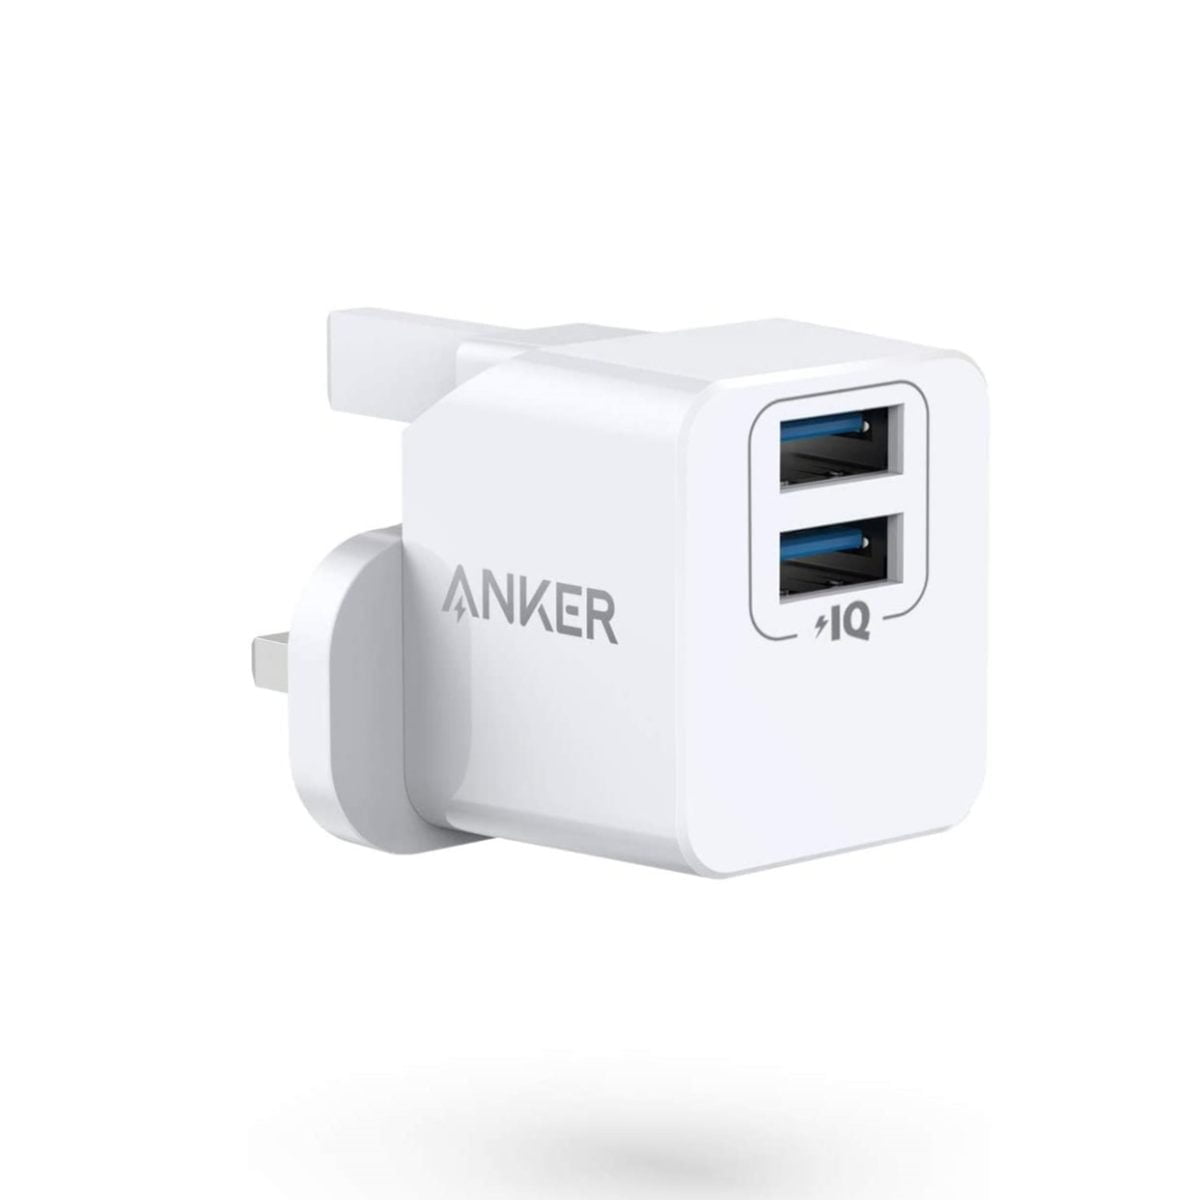 Anker Usb Plug, Powerport Mini Dual Port Usb Charger